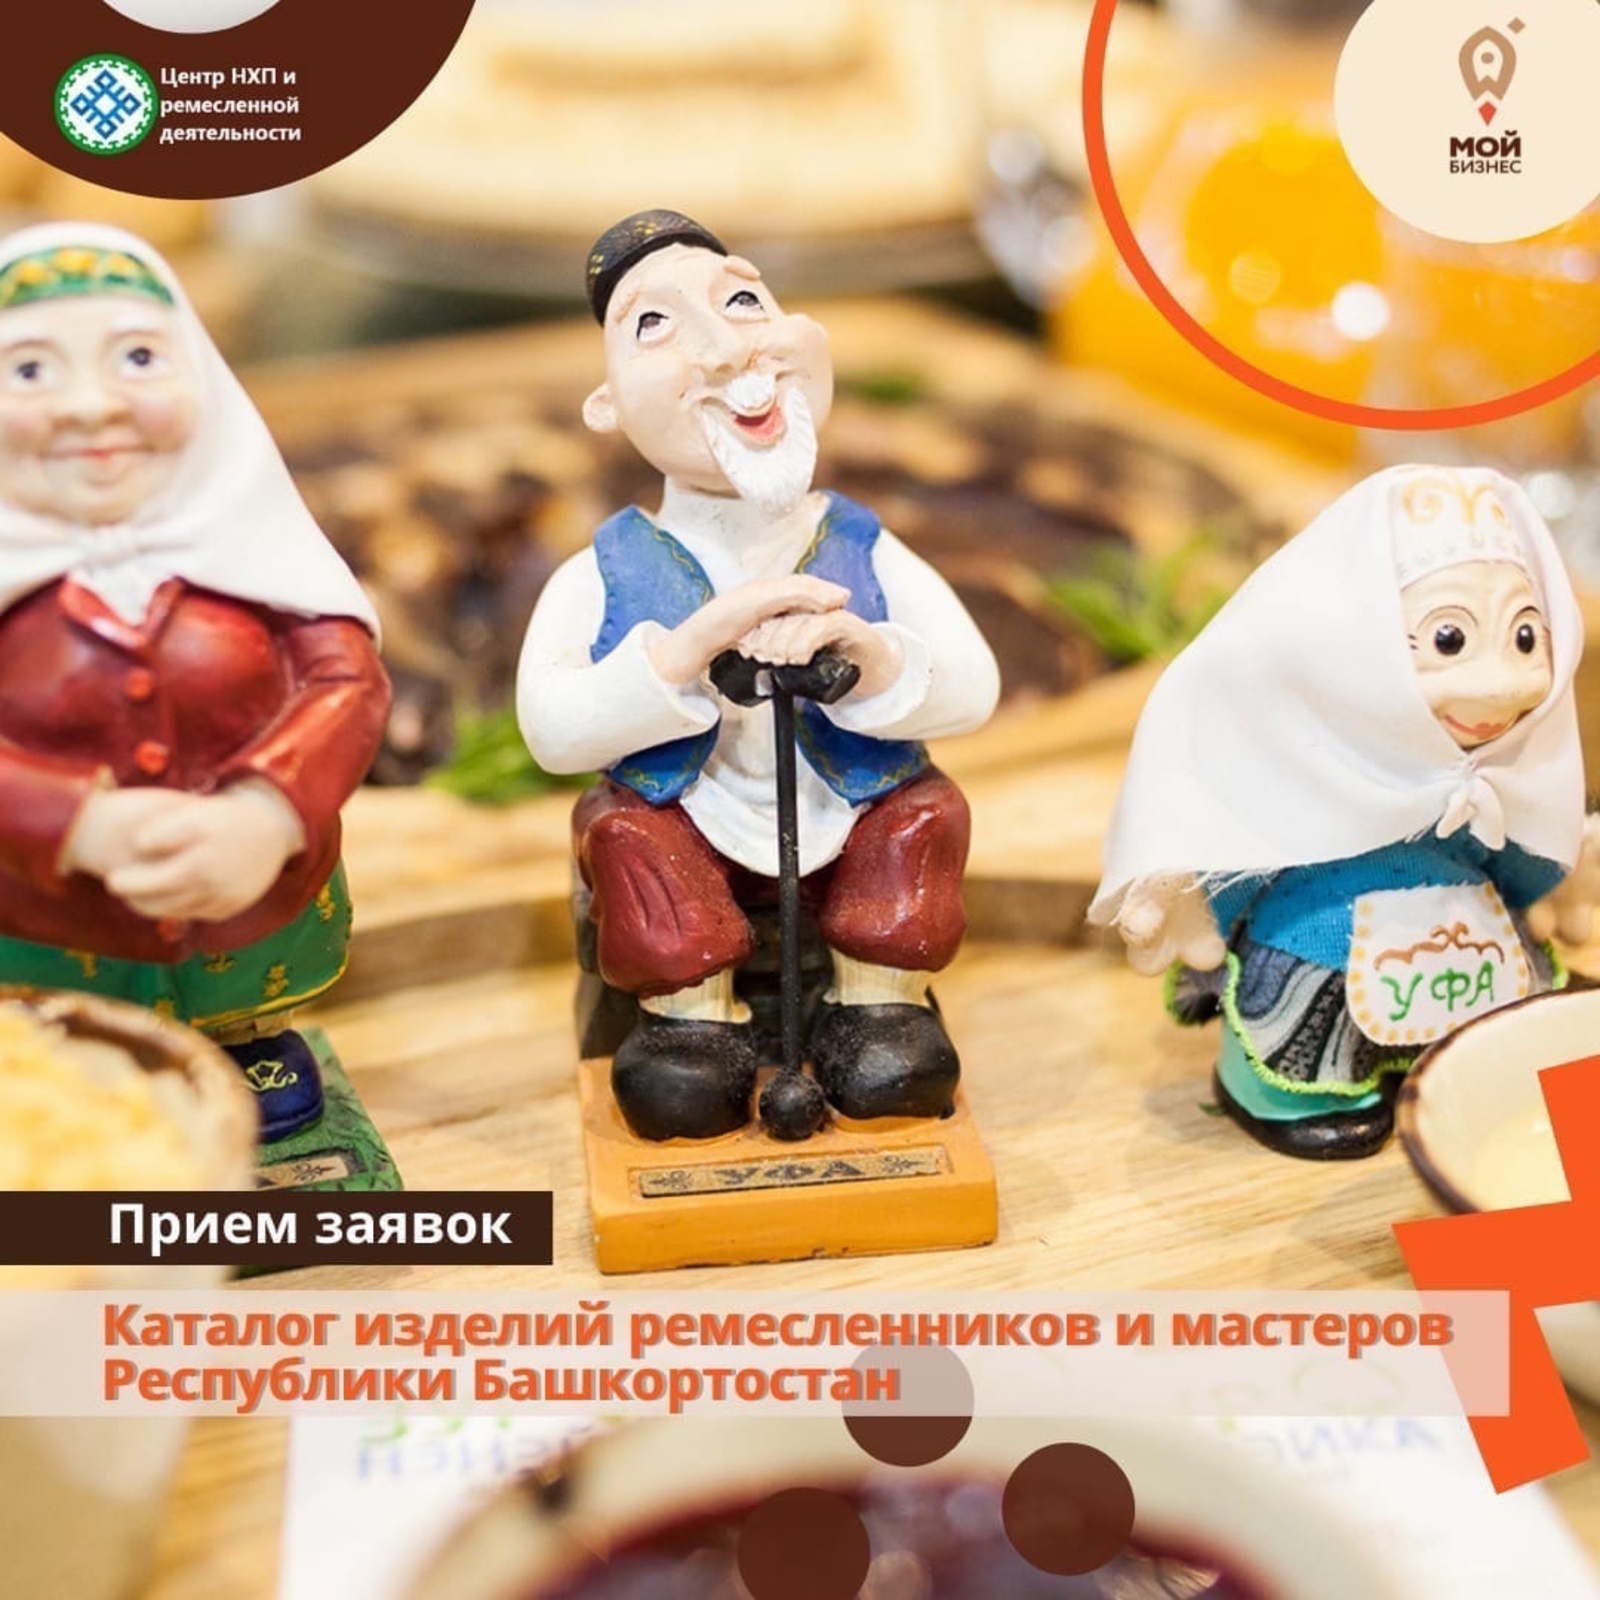 Внеси лепту в развитие креативных индустрий Башкортостана